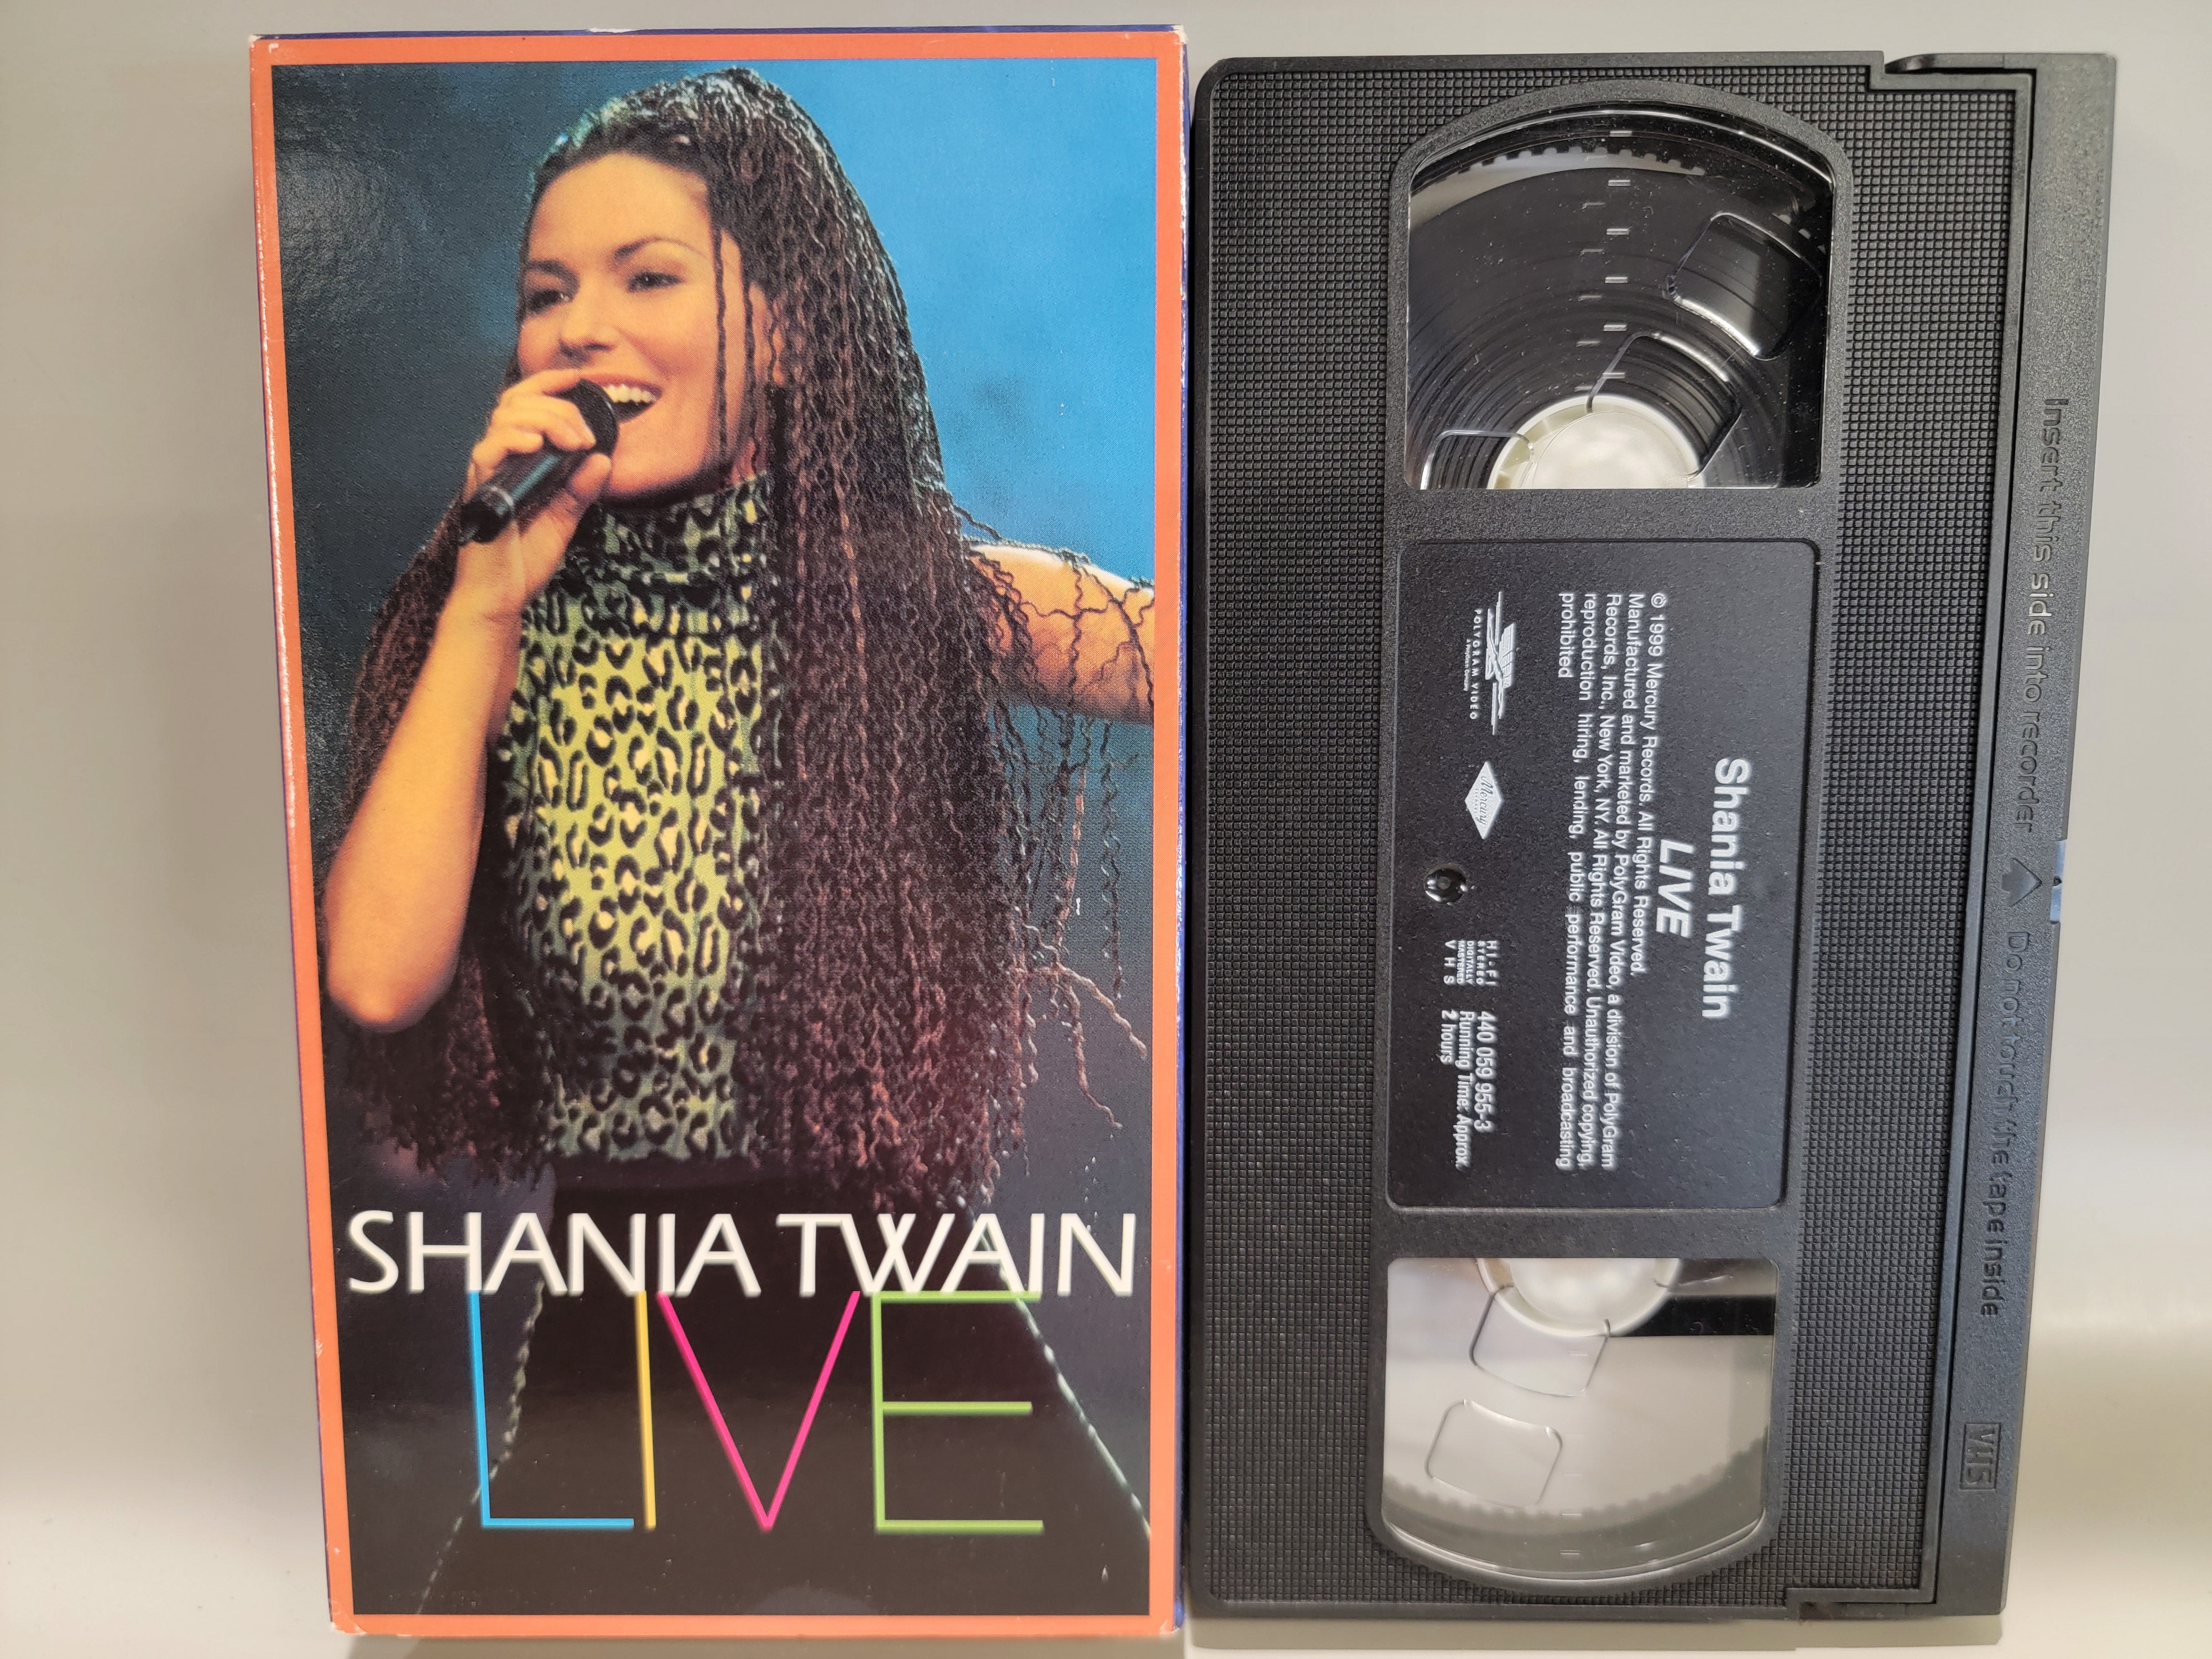 SHANIA TWAIN: LIVE VHS [USED]